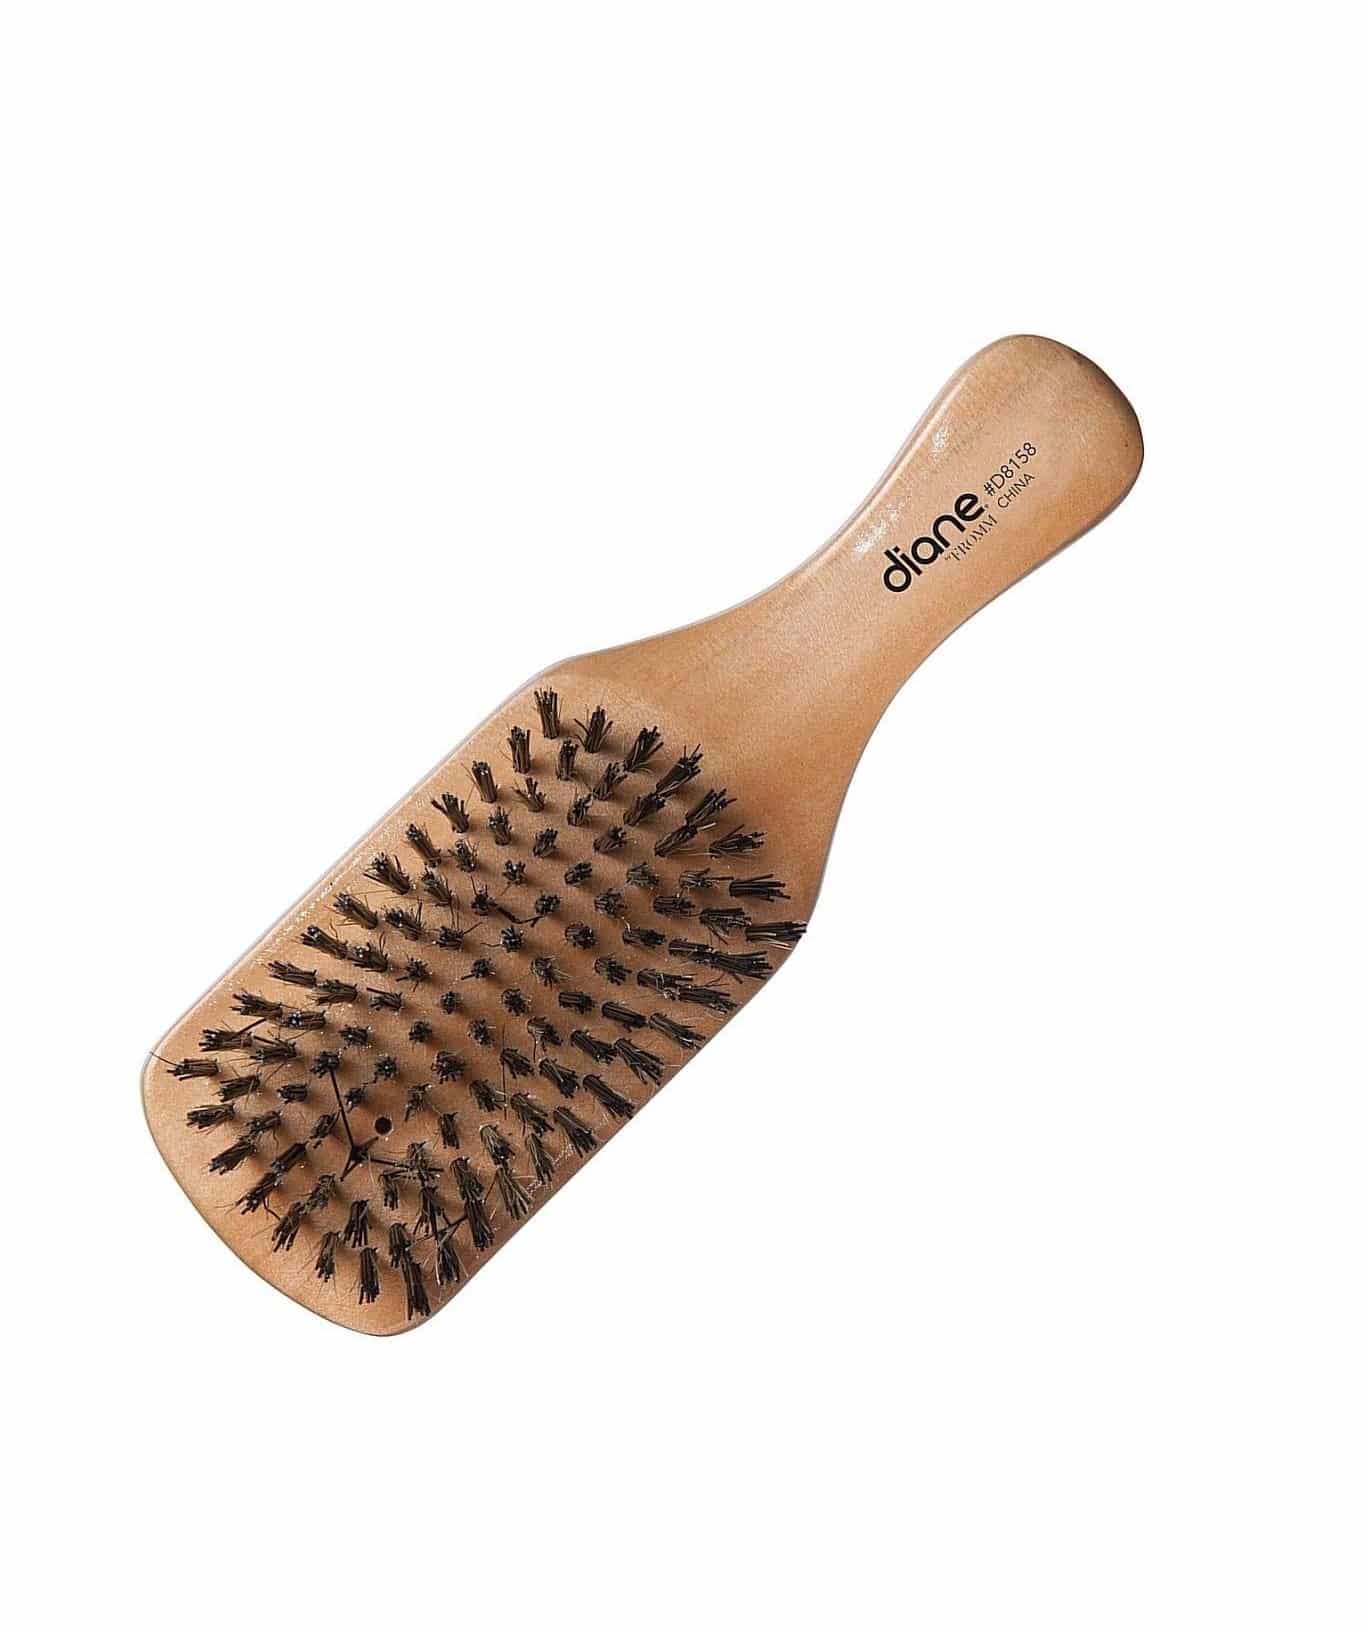 Hair Sponge Brush for Wavy Twist & Short Twist